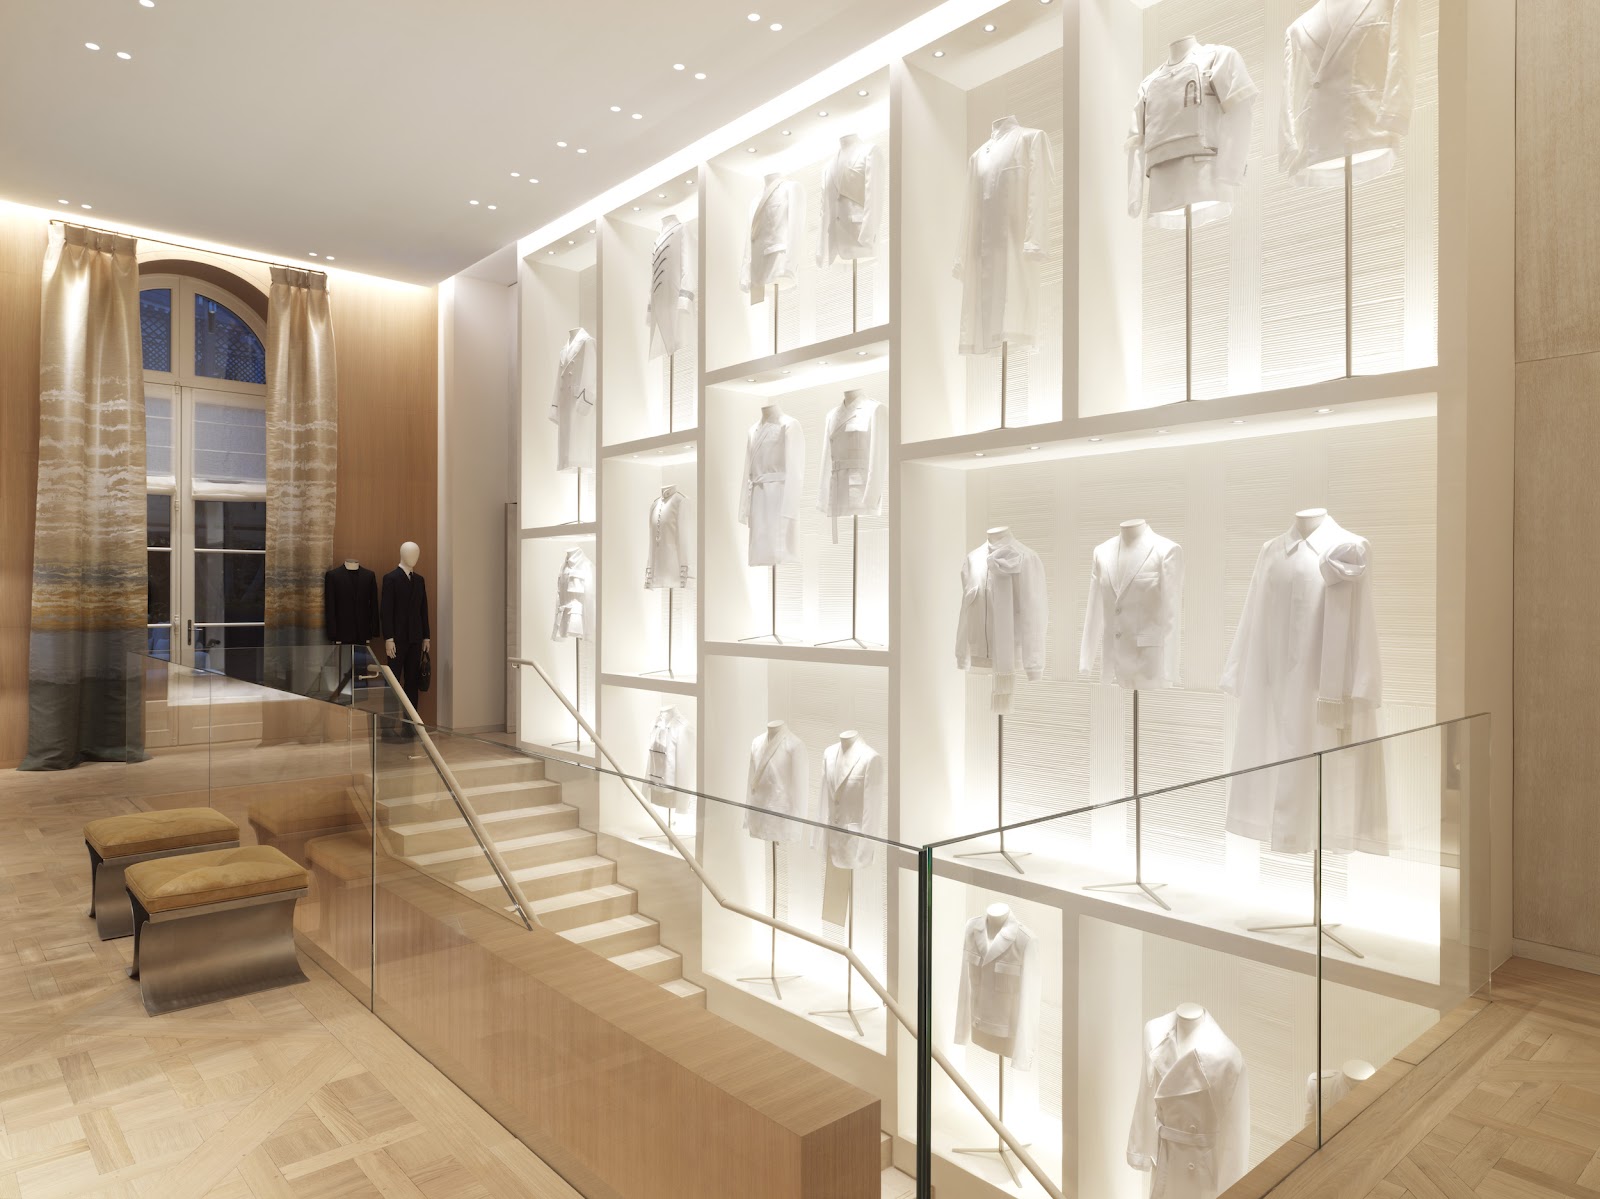 Dior Reopens 30 Avenue Montaigne Location